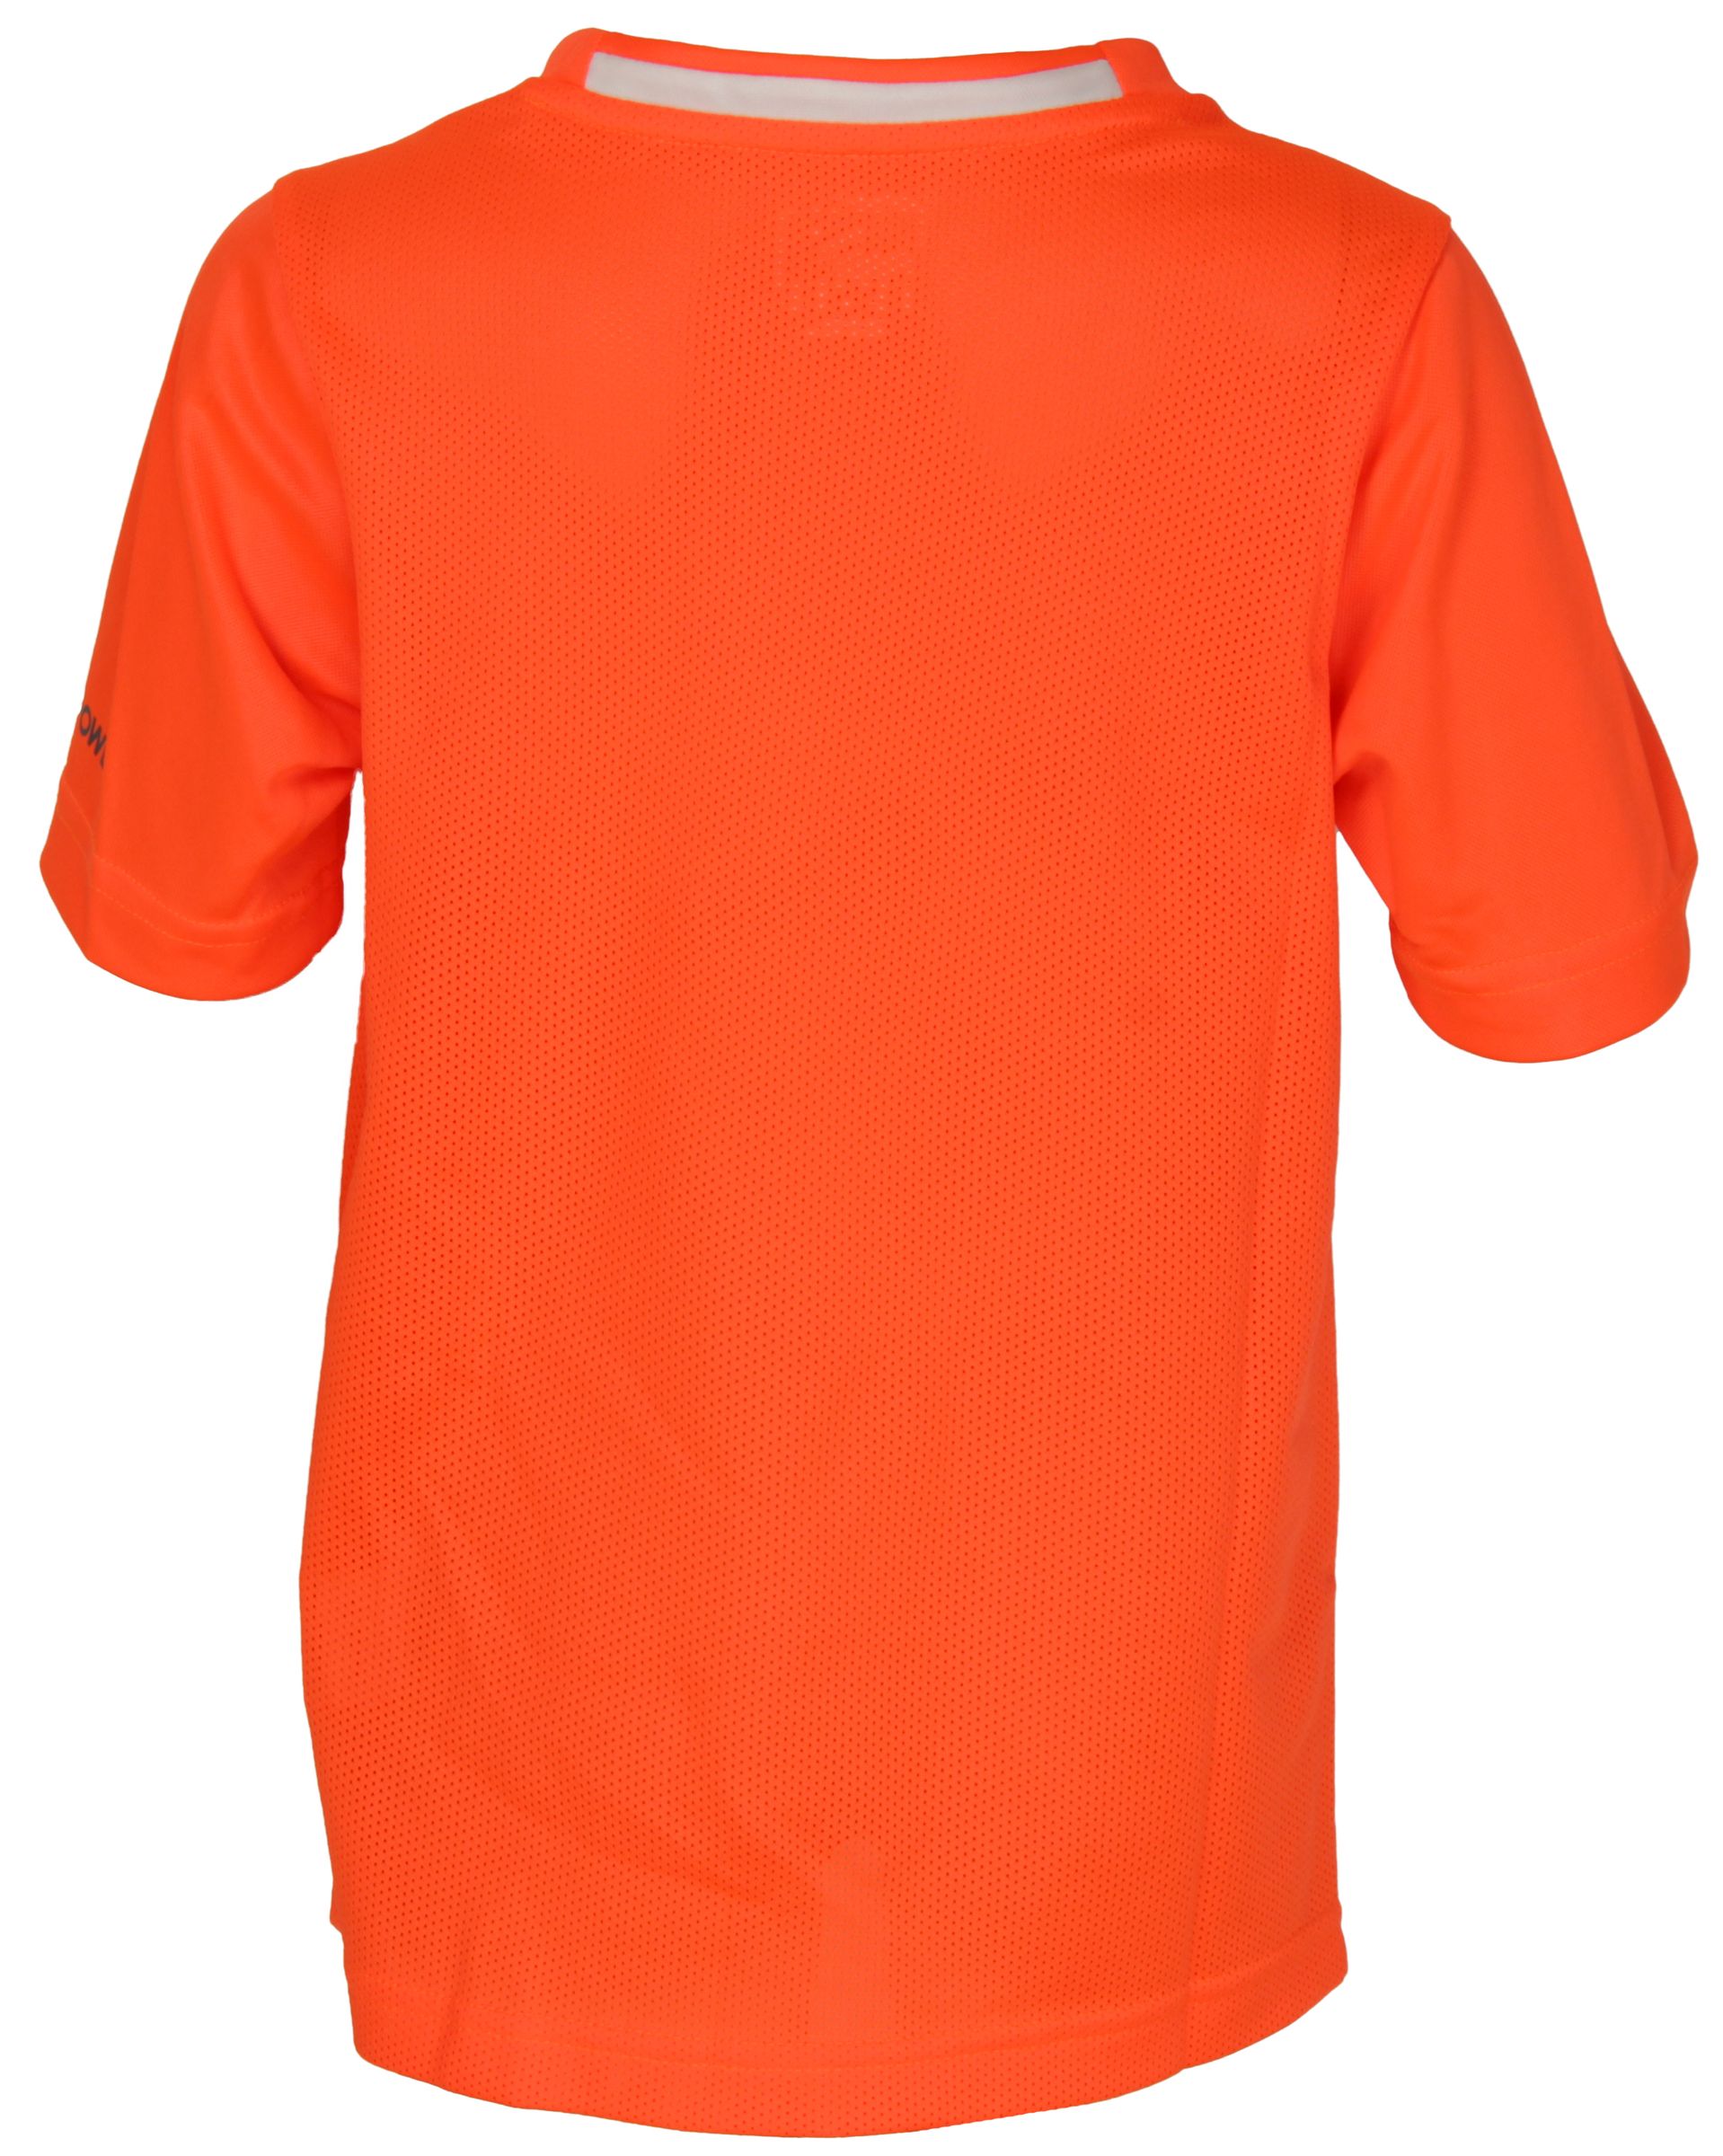 PUMA IT evoPower Graphic Tee Shirt T-Shirt DryCELL Kids neon 653999